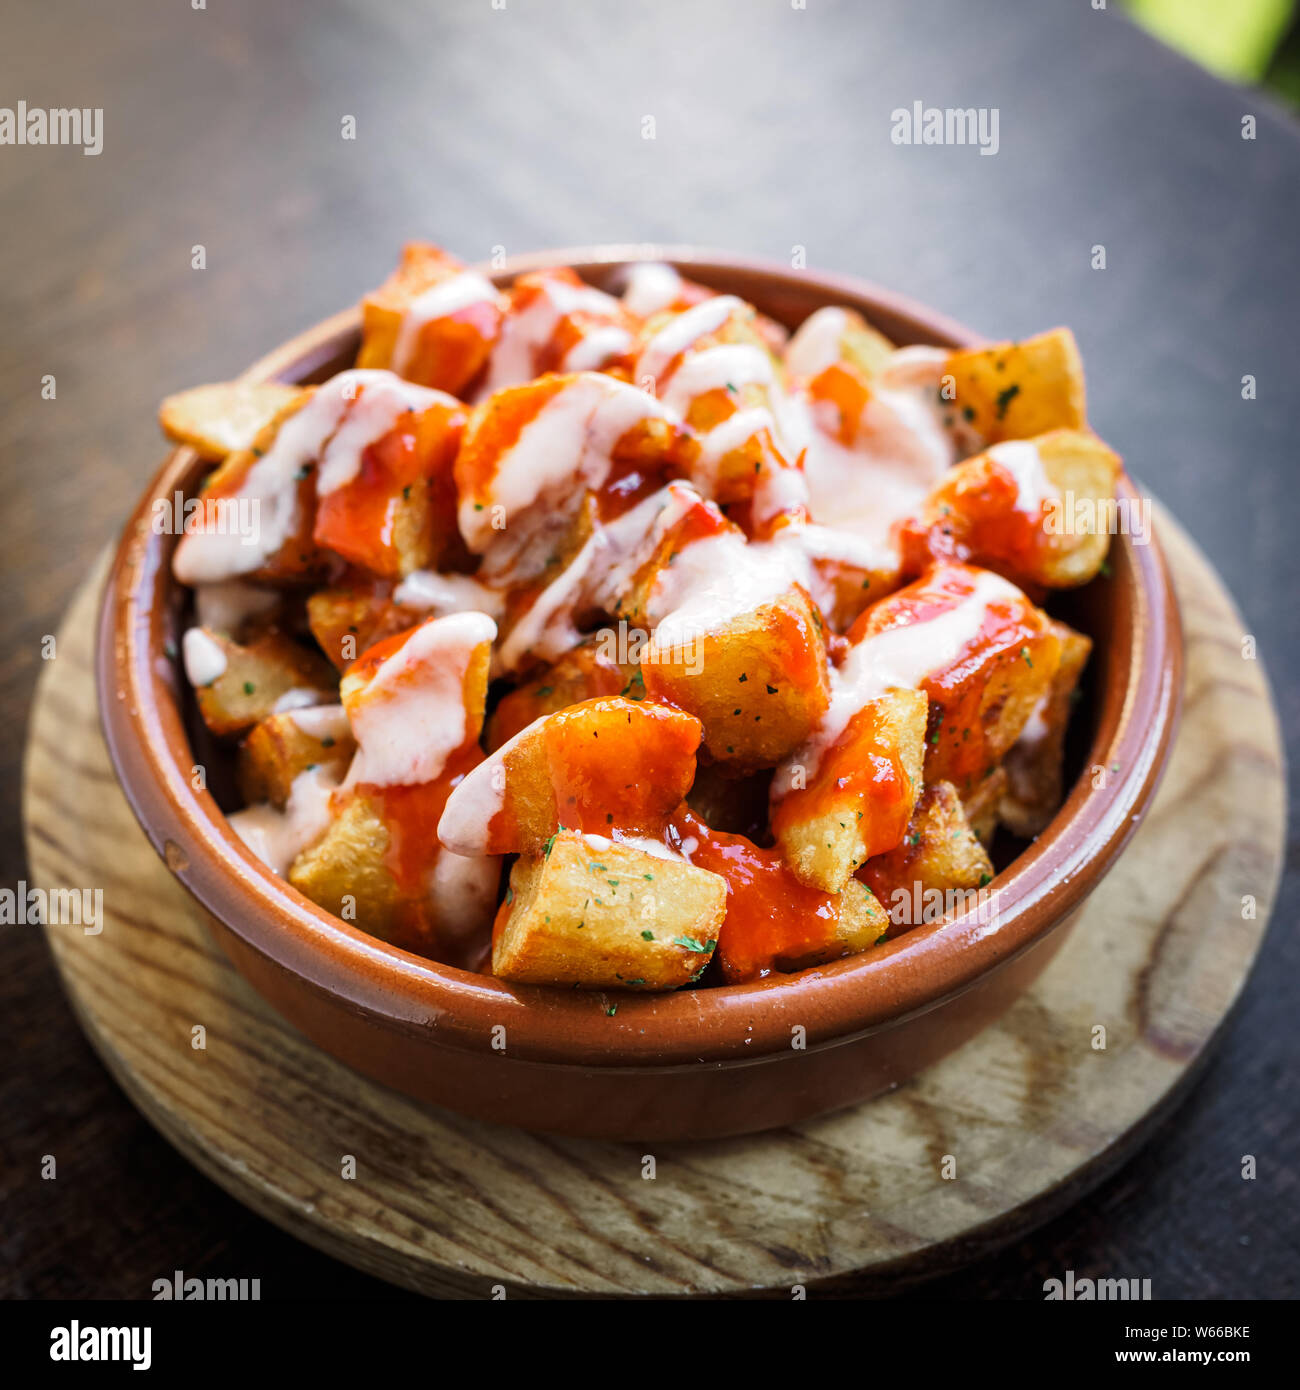 Spanish potatoes patatas bravas for tapas with tomato and spicy sauce on a bowl Stock Photo